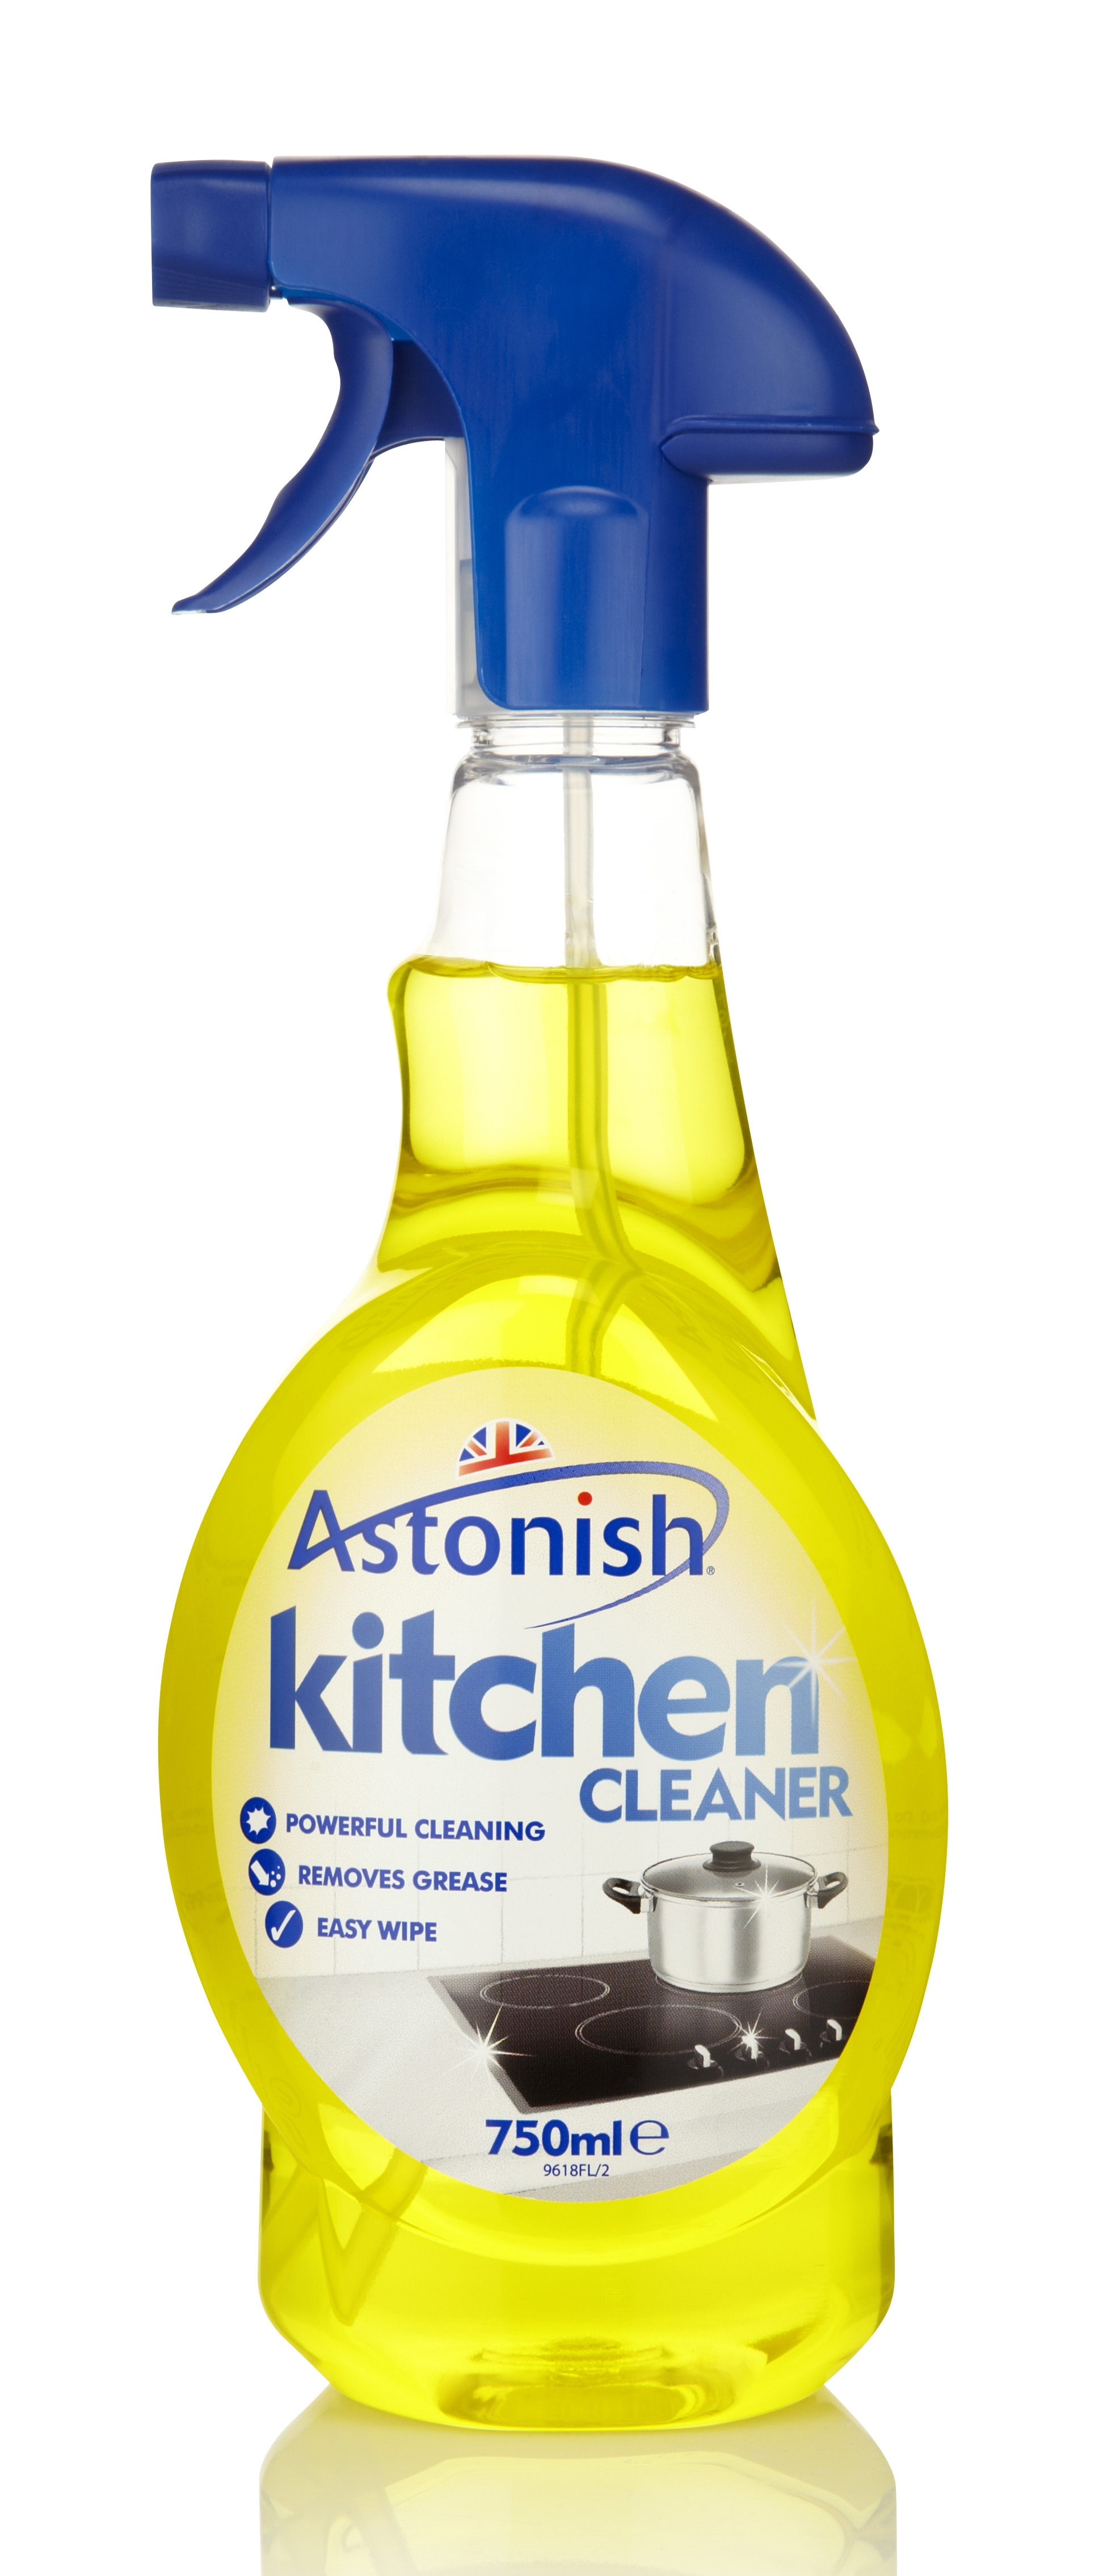 Astonish Kitchen Cleaner 750ml.jpg